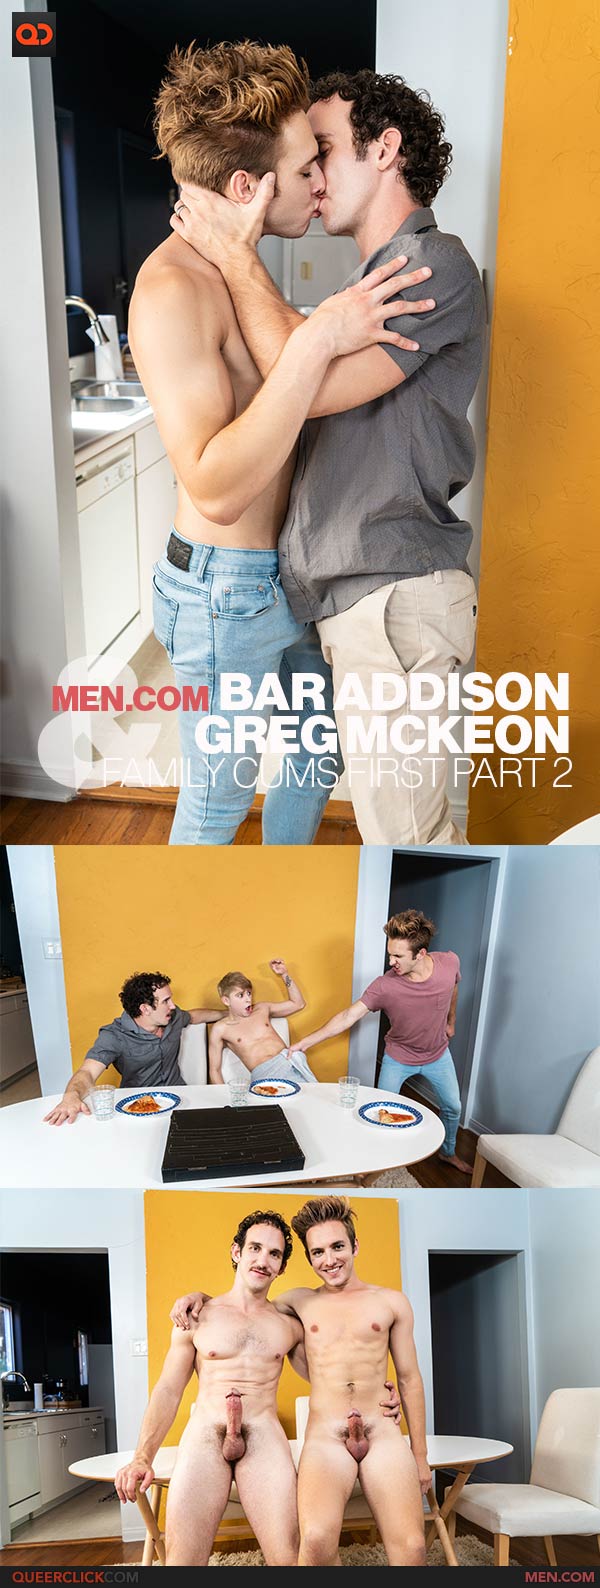 Men.com: Bar Addison and Greg Mckeon